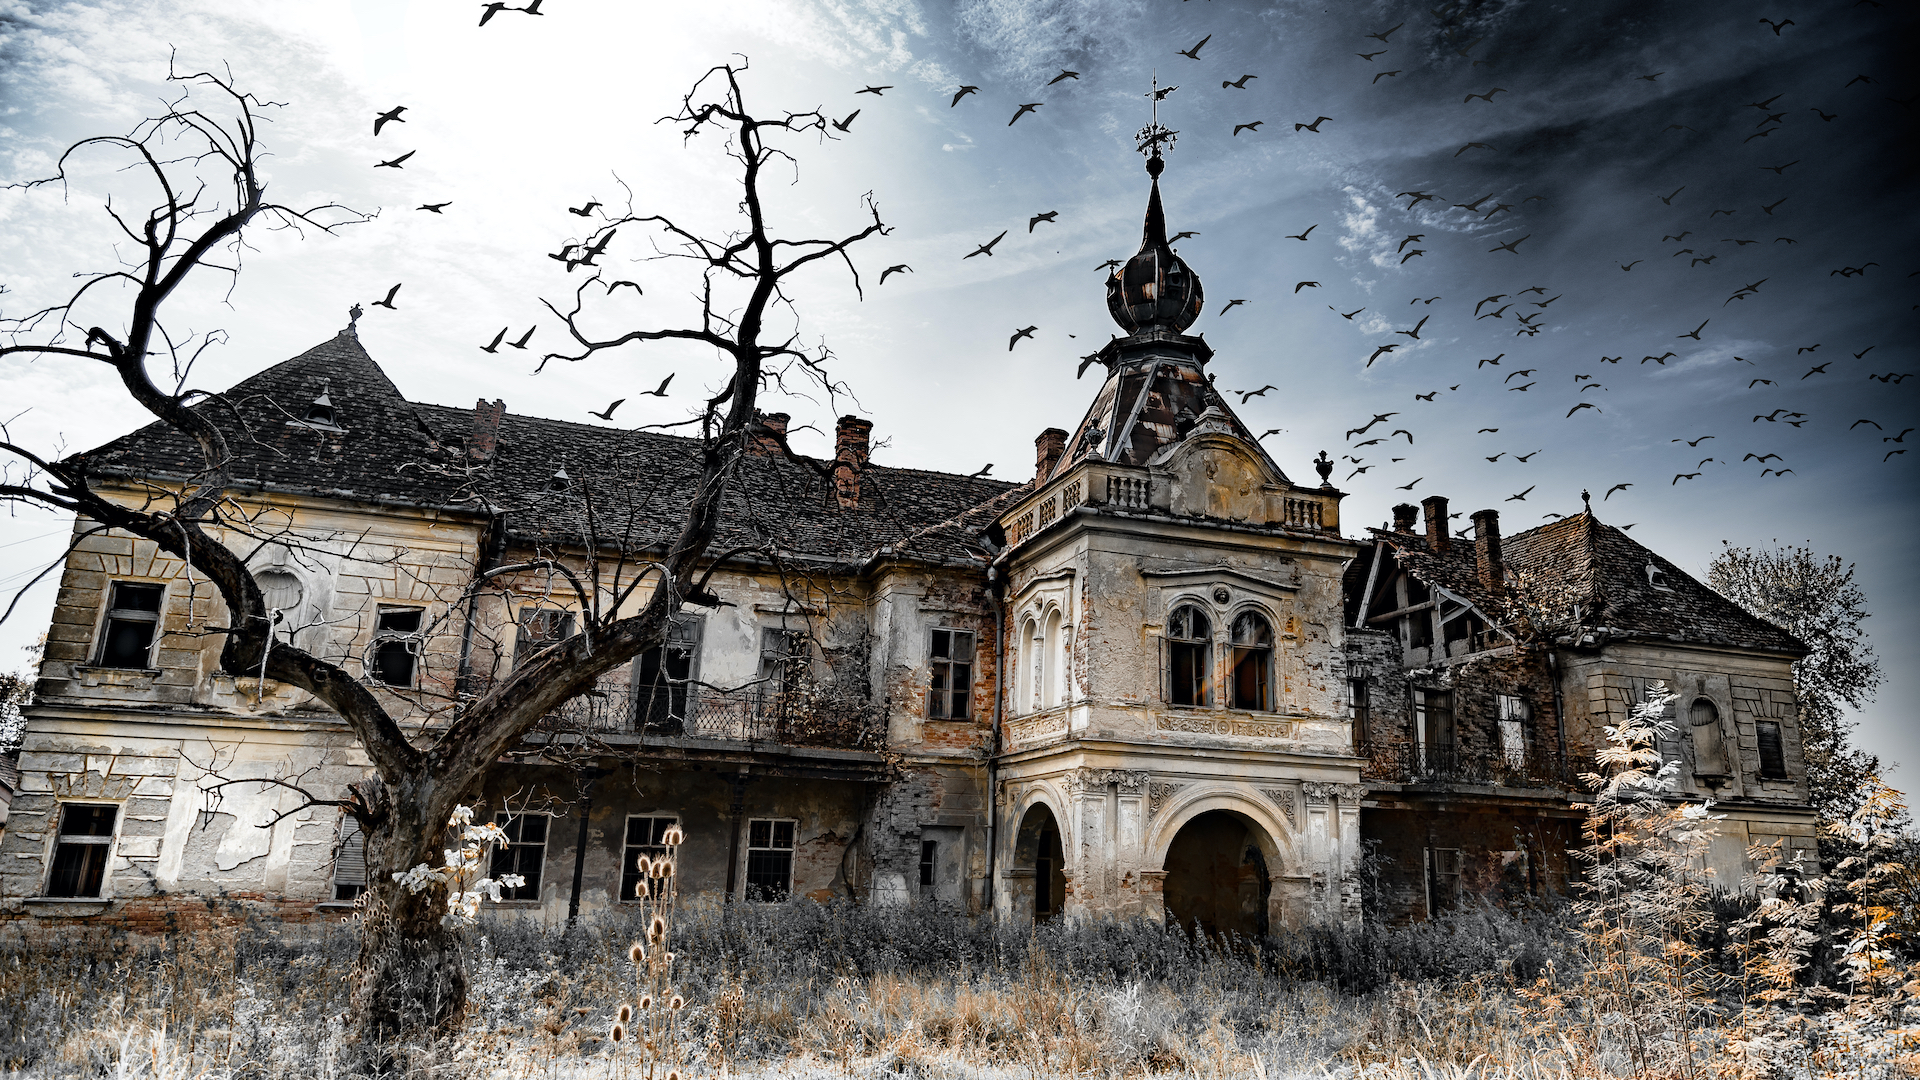 A spooky house